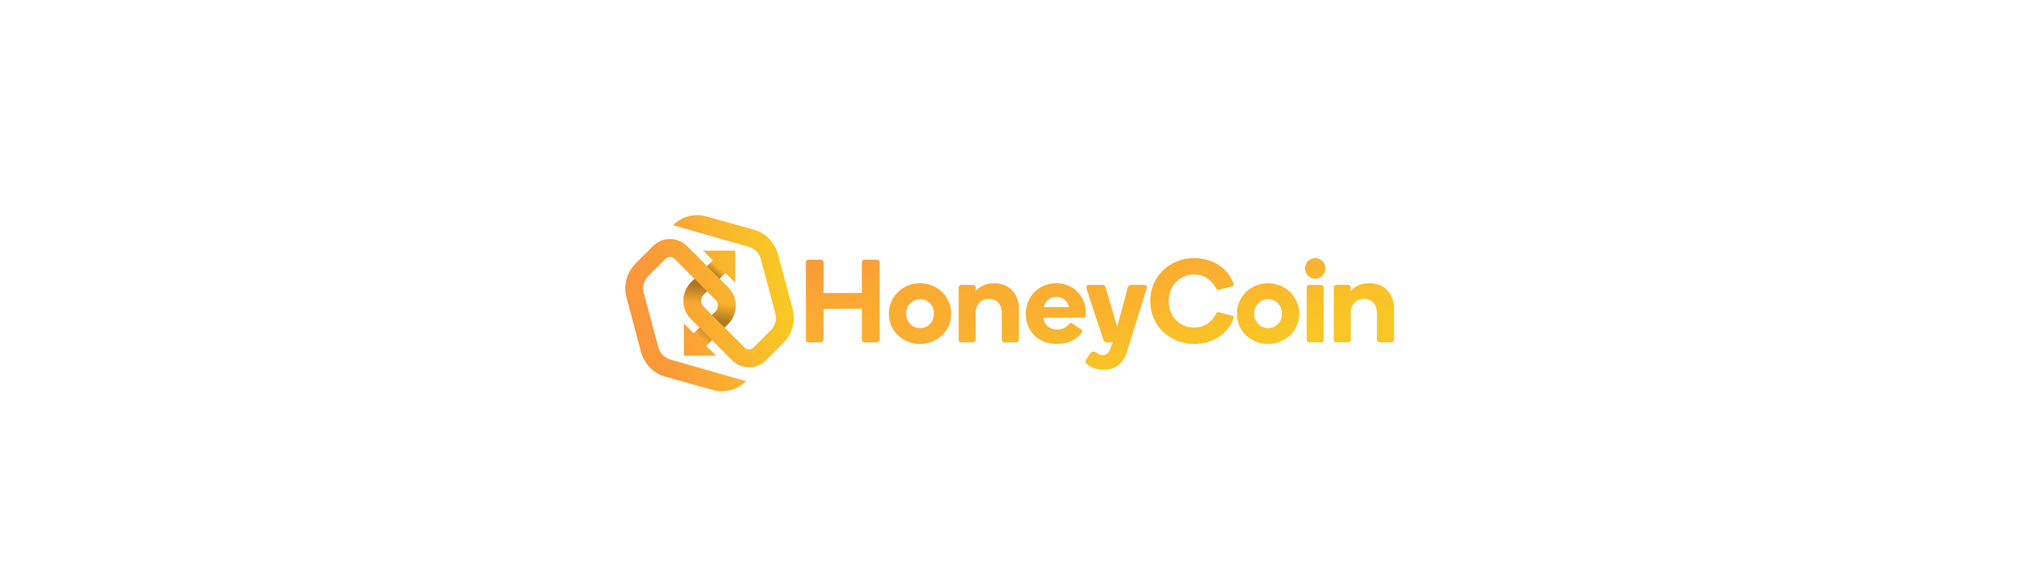 Honeycoin